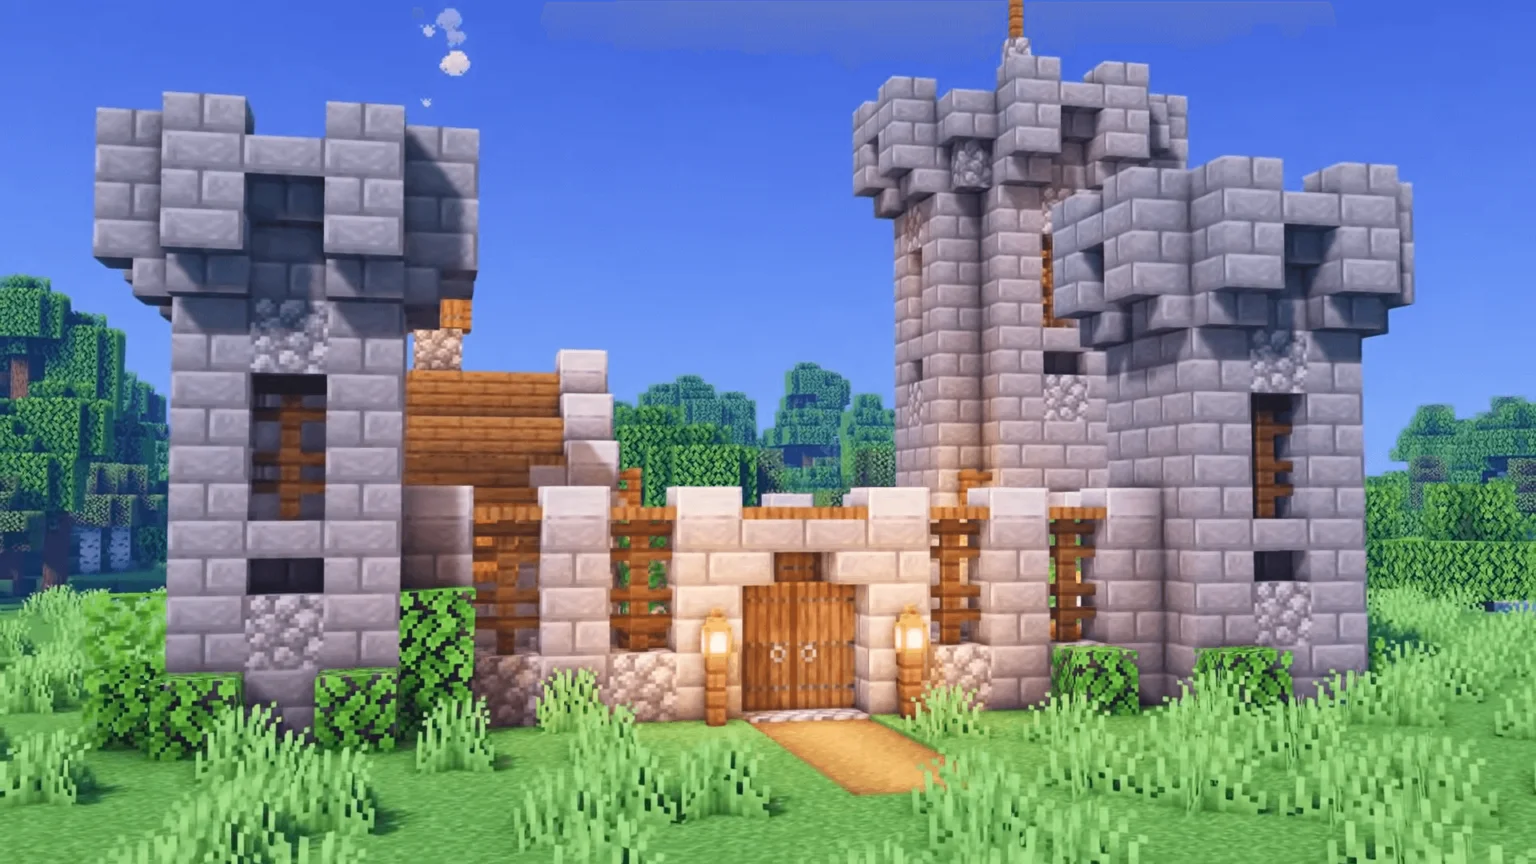 Minecraft castle ideas 1 1536x864.png